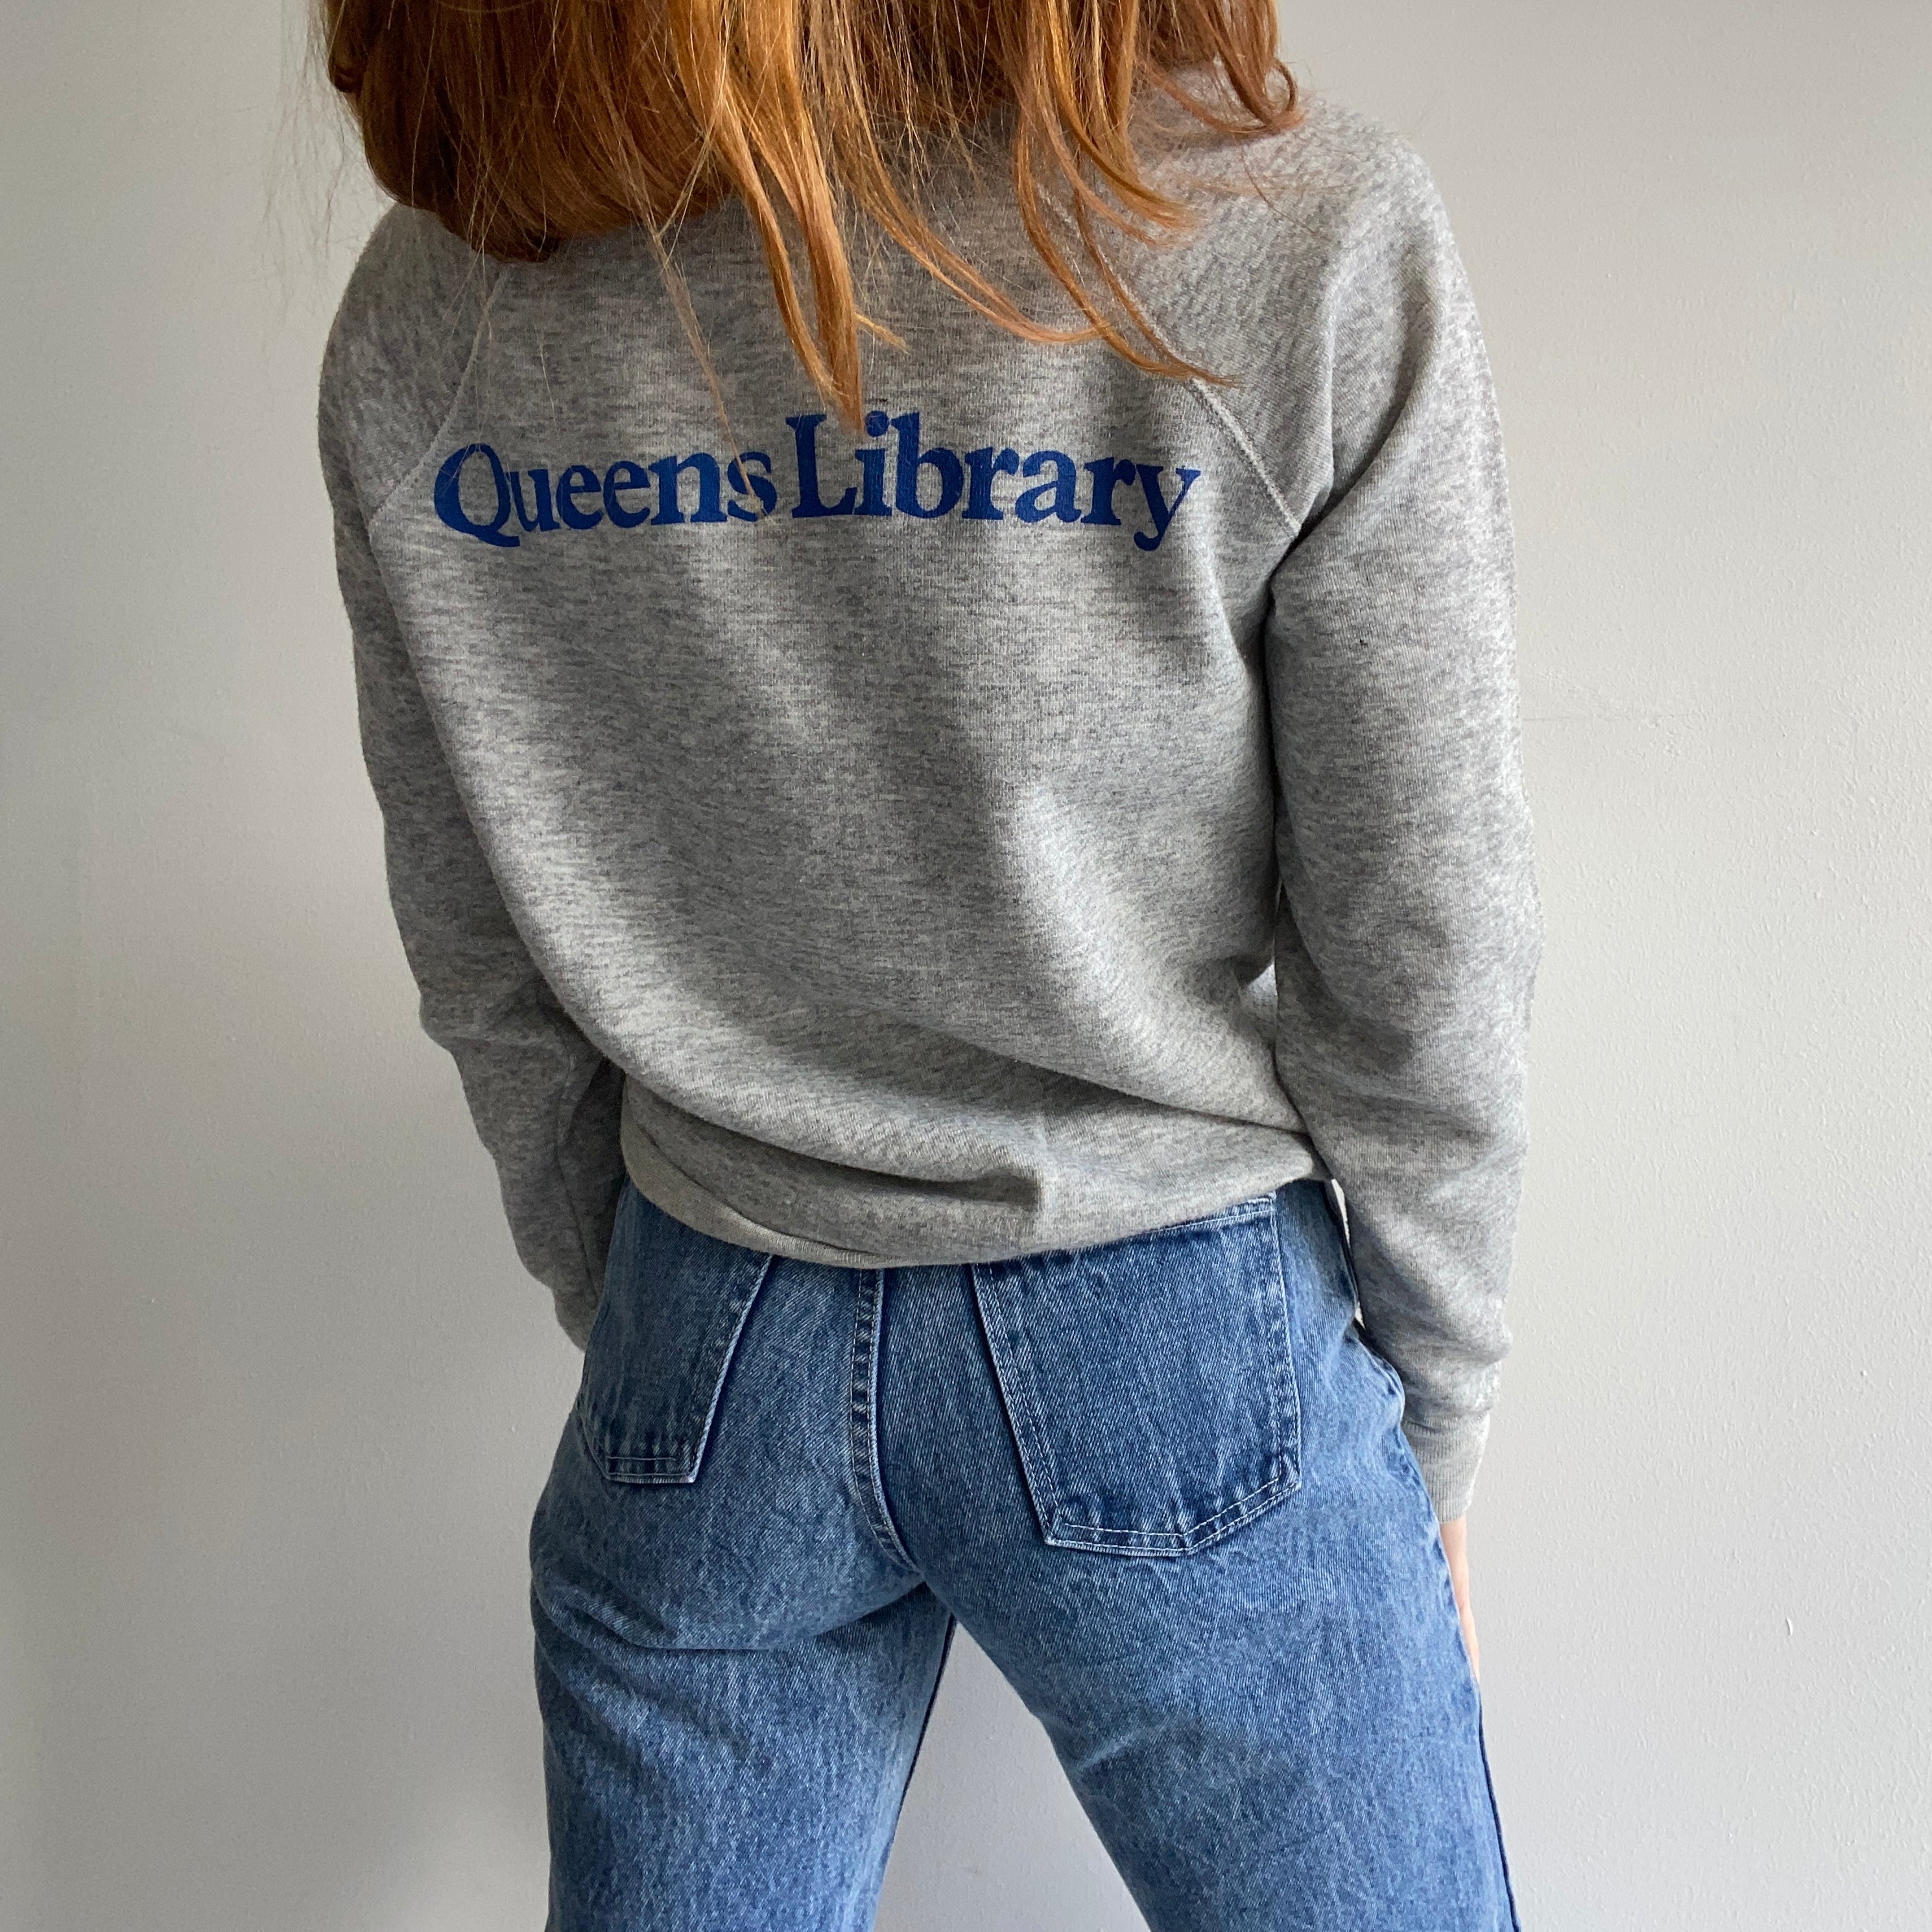 Sweat-shirt Queens Library des années 1970